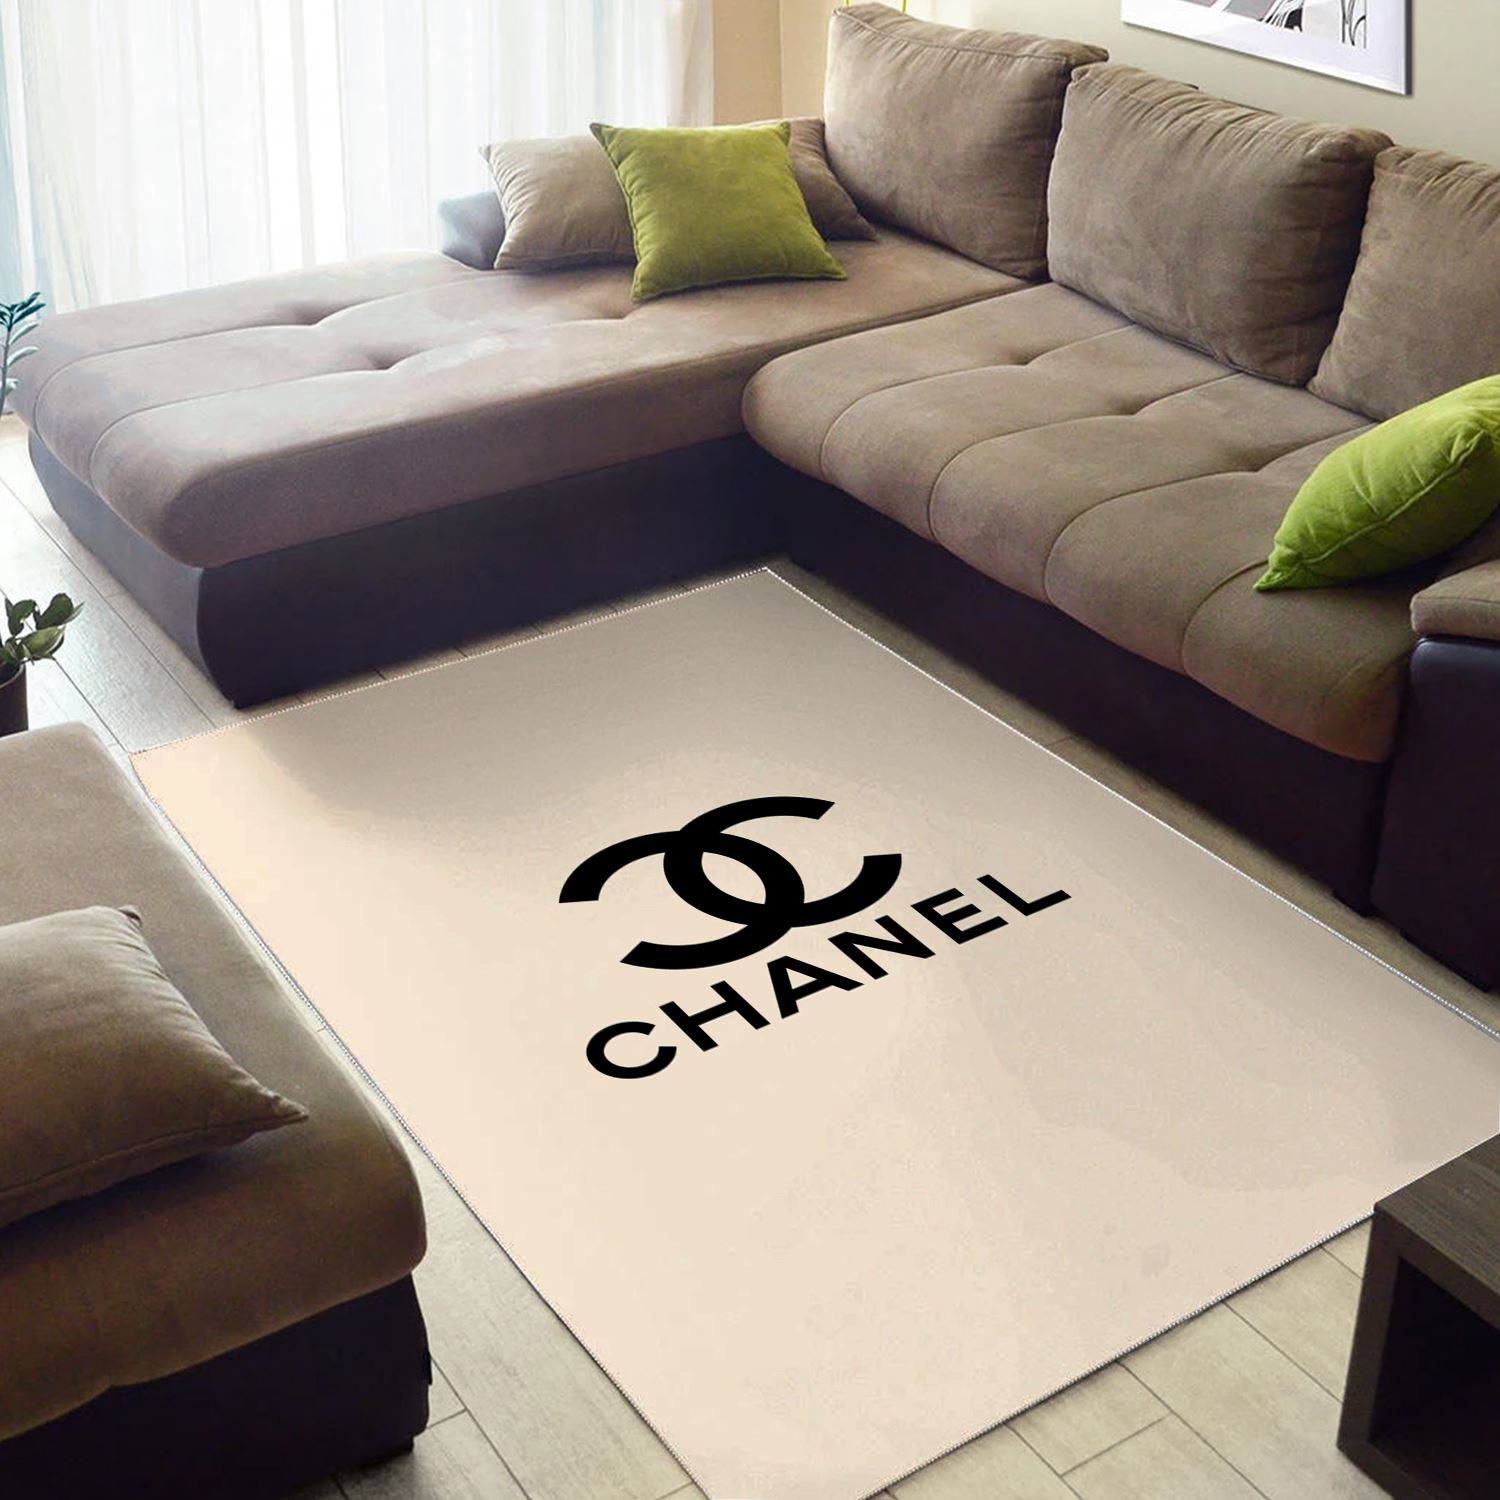 Chanel Beige Rectangle Rug Luxury Home Decor Fashion Brand Area Carpet Door Mat